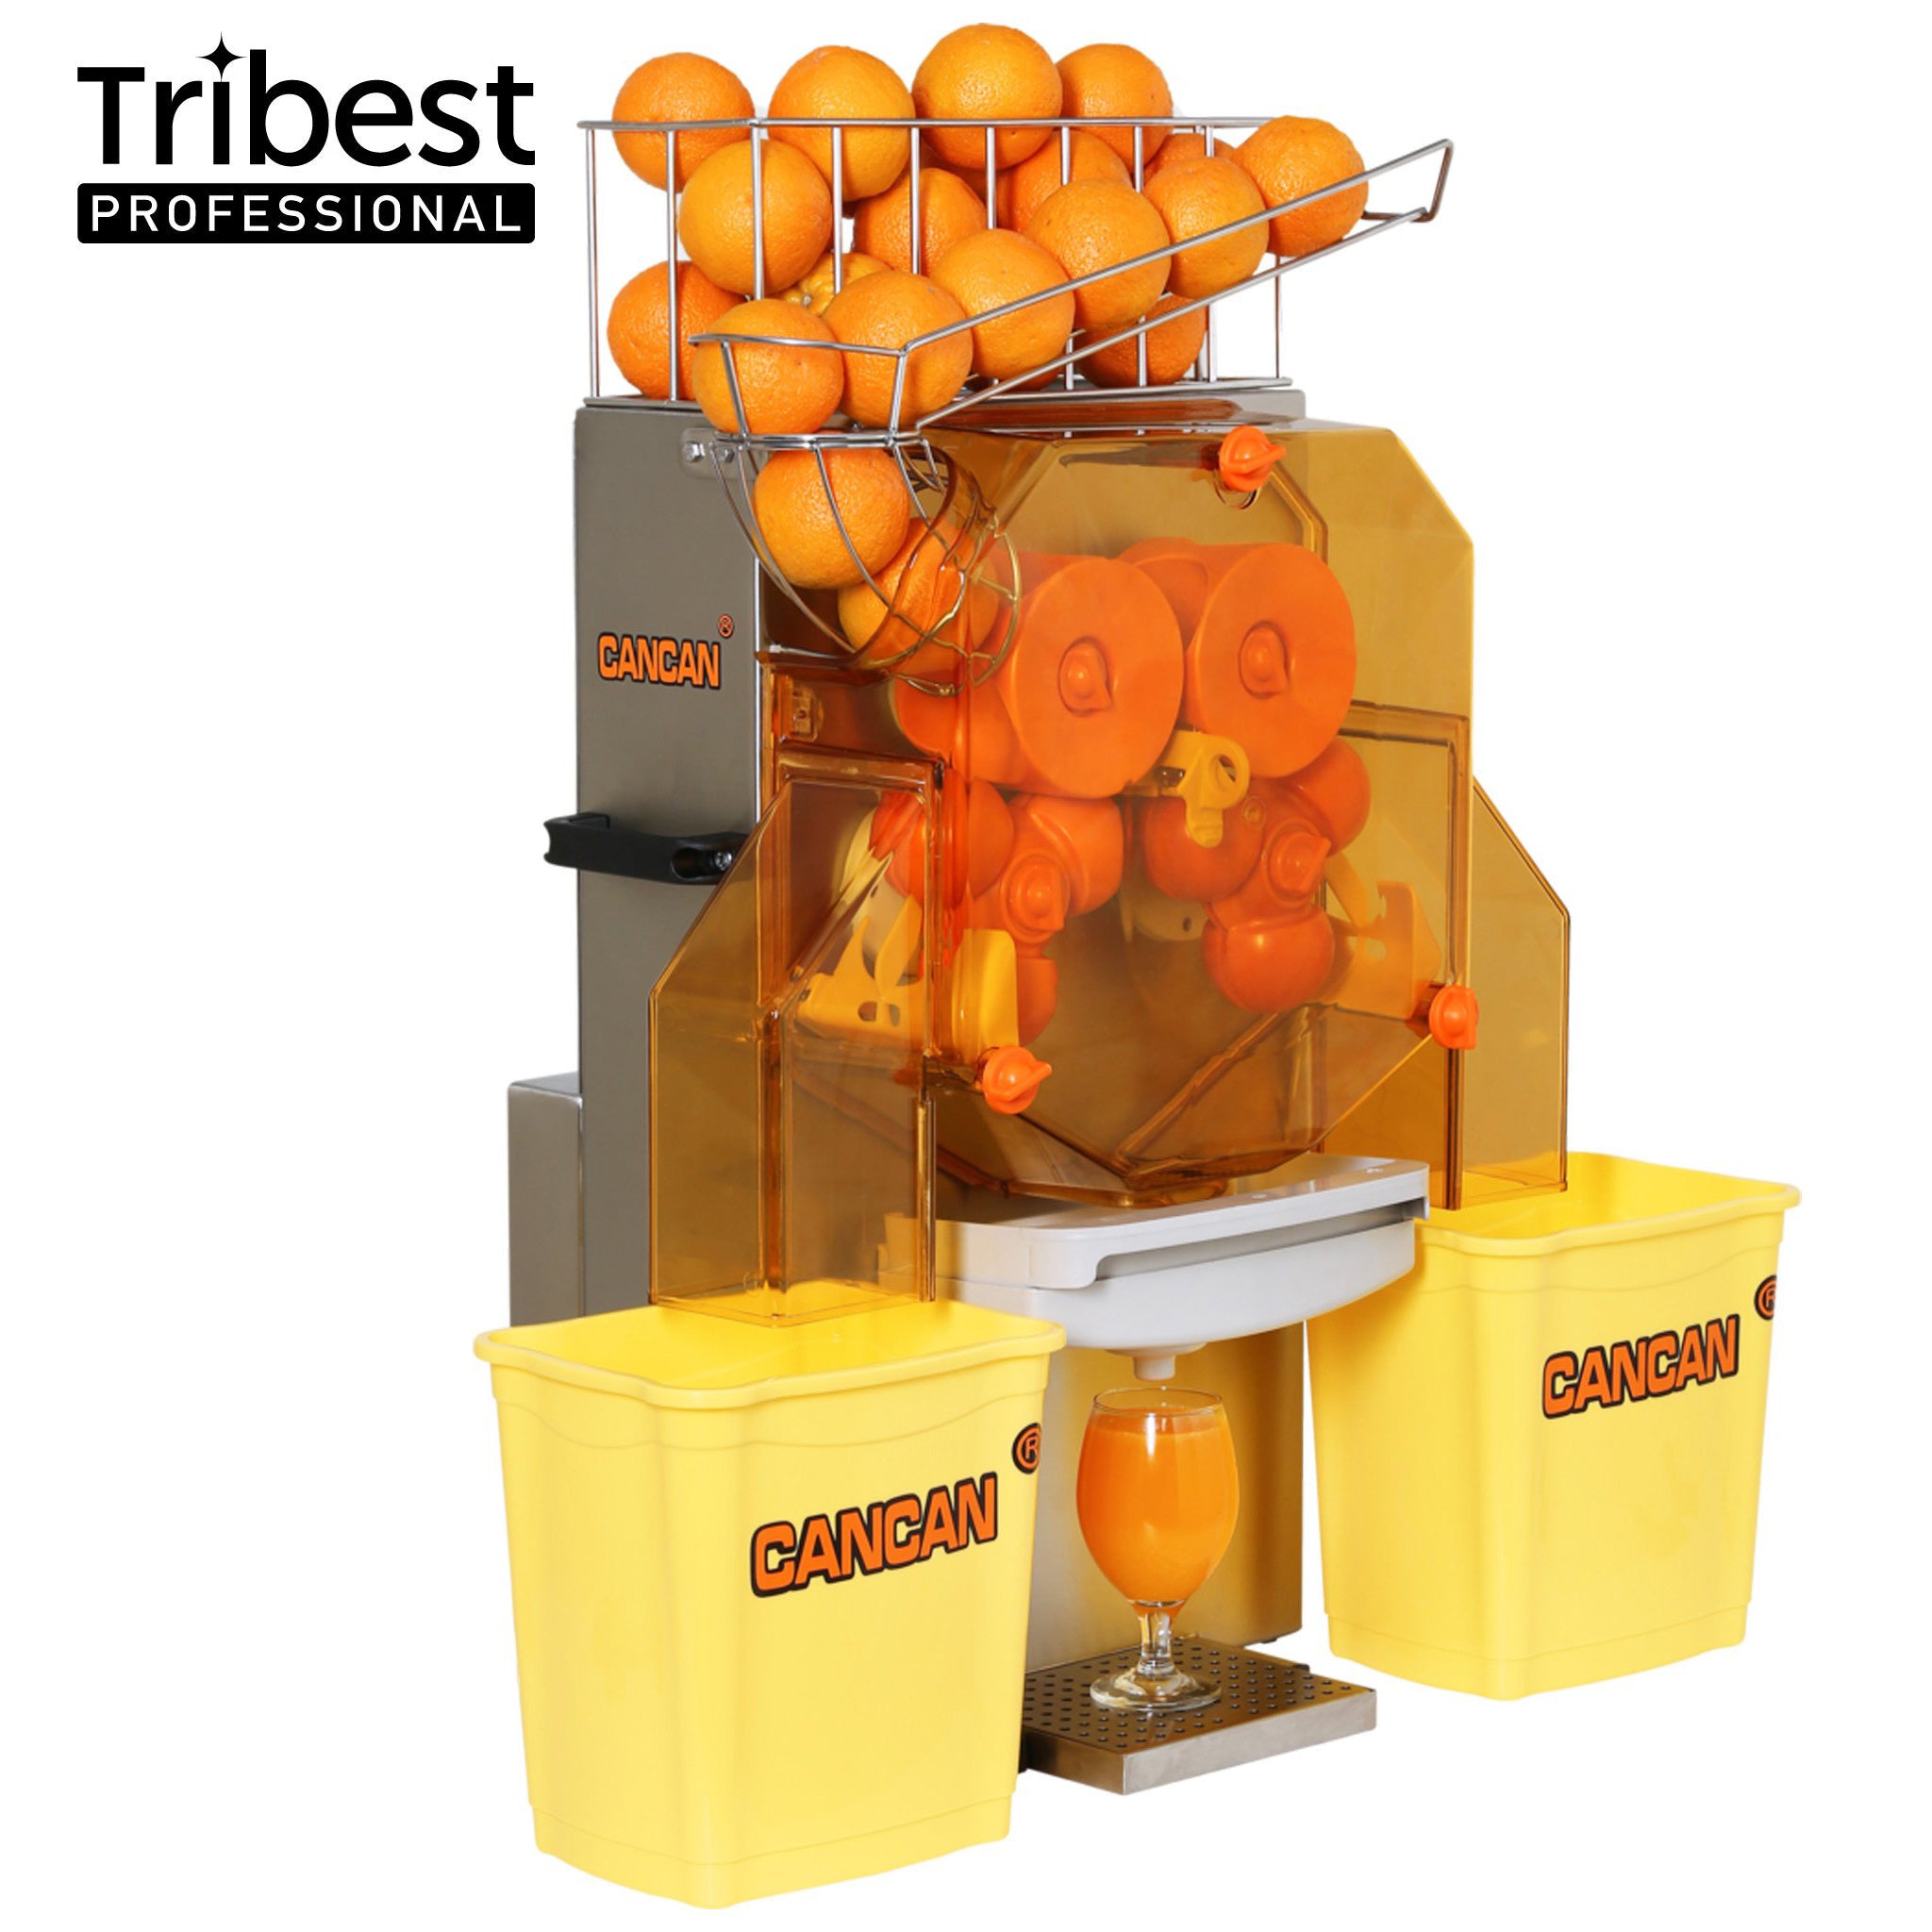 Tribest Professional Cancan Automatic Orange Juicer